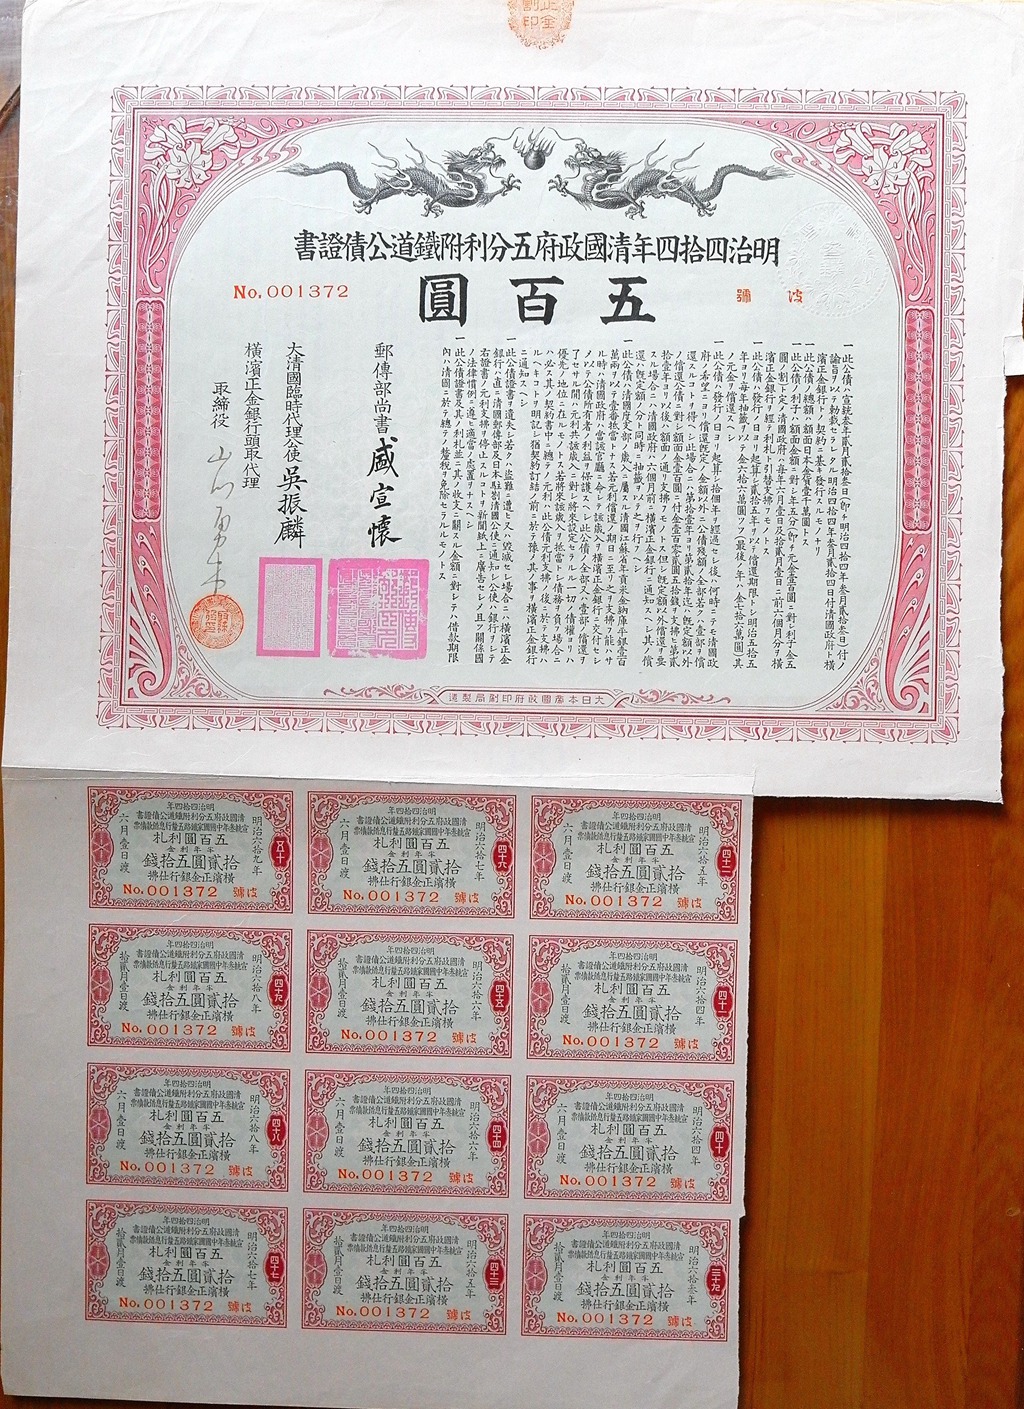 B9062, China 5% Peking-Hankow Railway Loan, 500 Gold Yen Bond, 1911